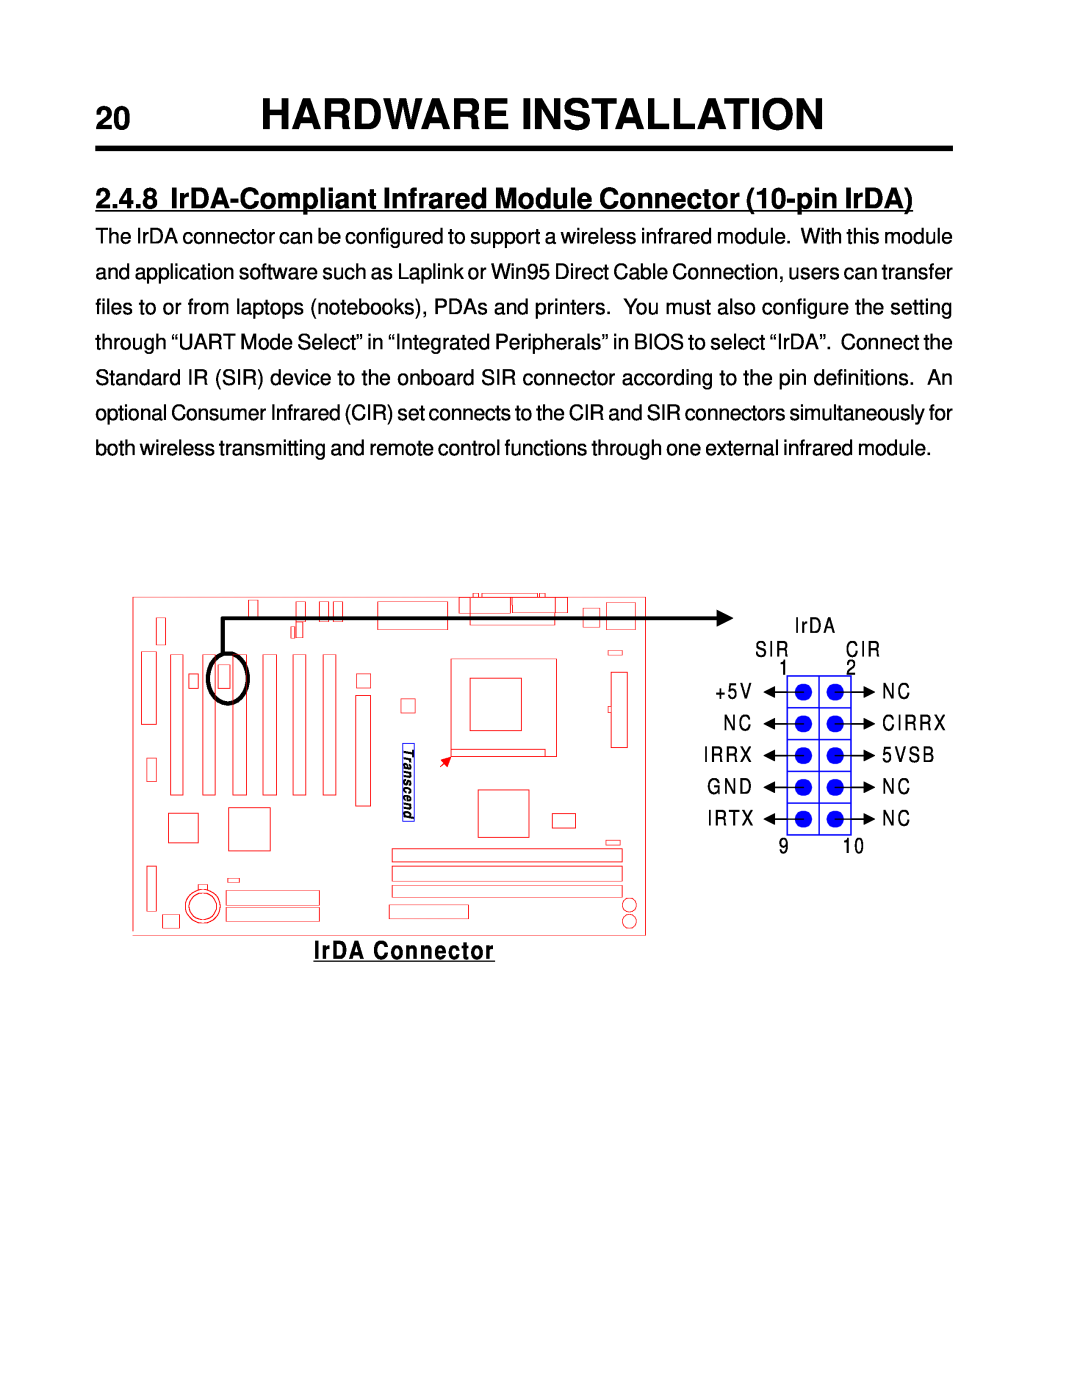 Intel TS-ASP3 user manual Hardware Installation, IrDA Connector 